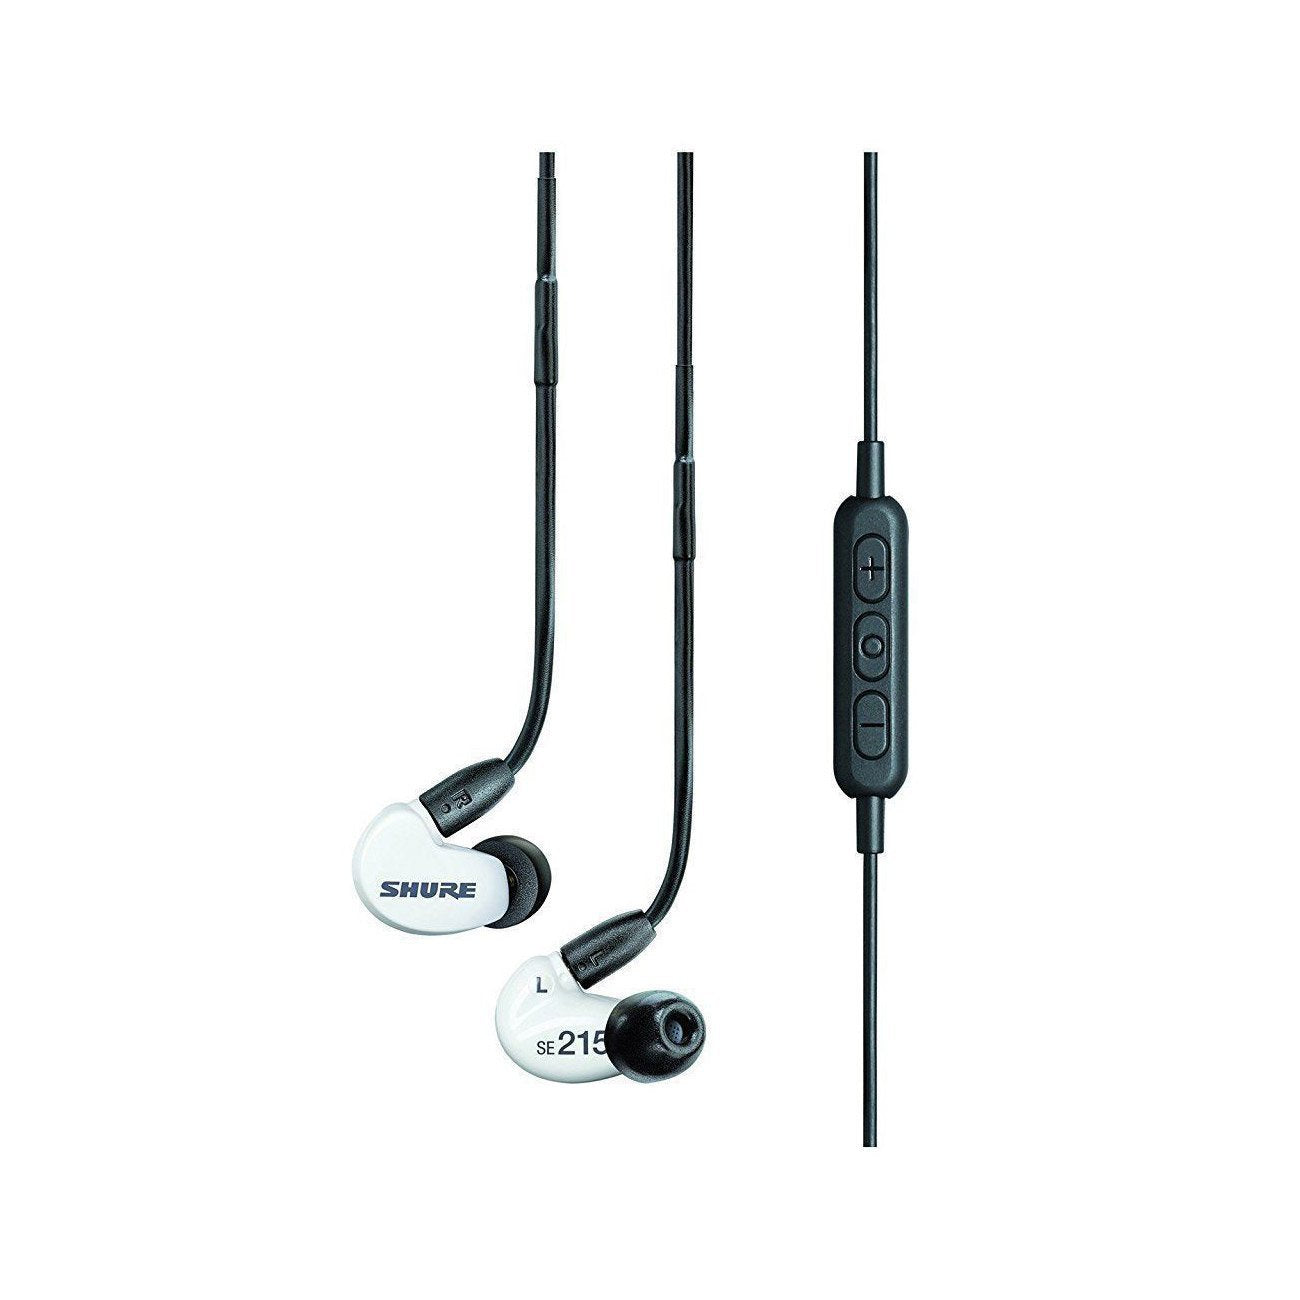 Shure SE215SPE-W-BT1 Wireless Sound Isolating Earphones